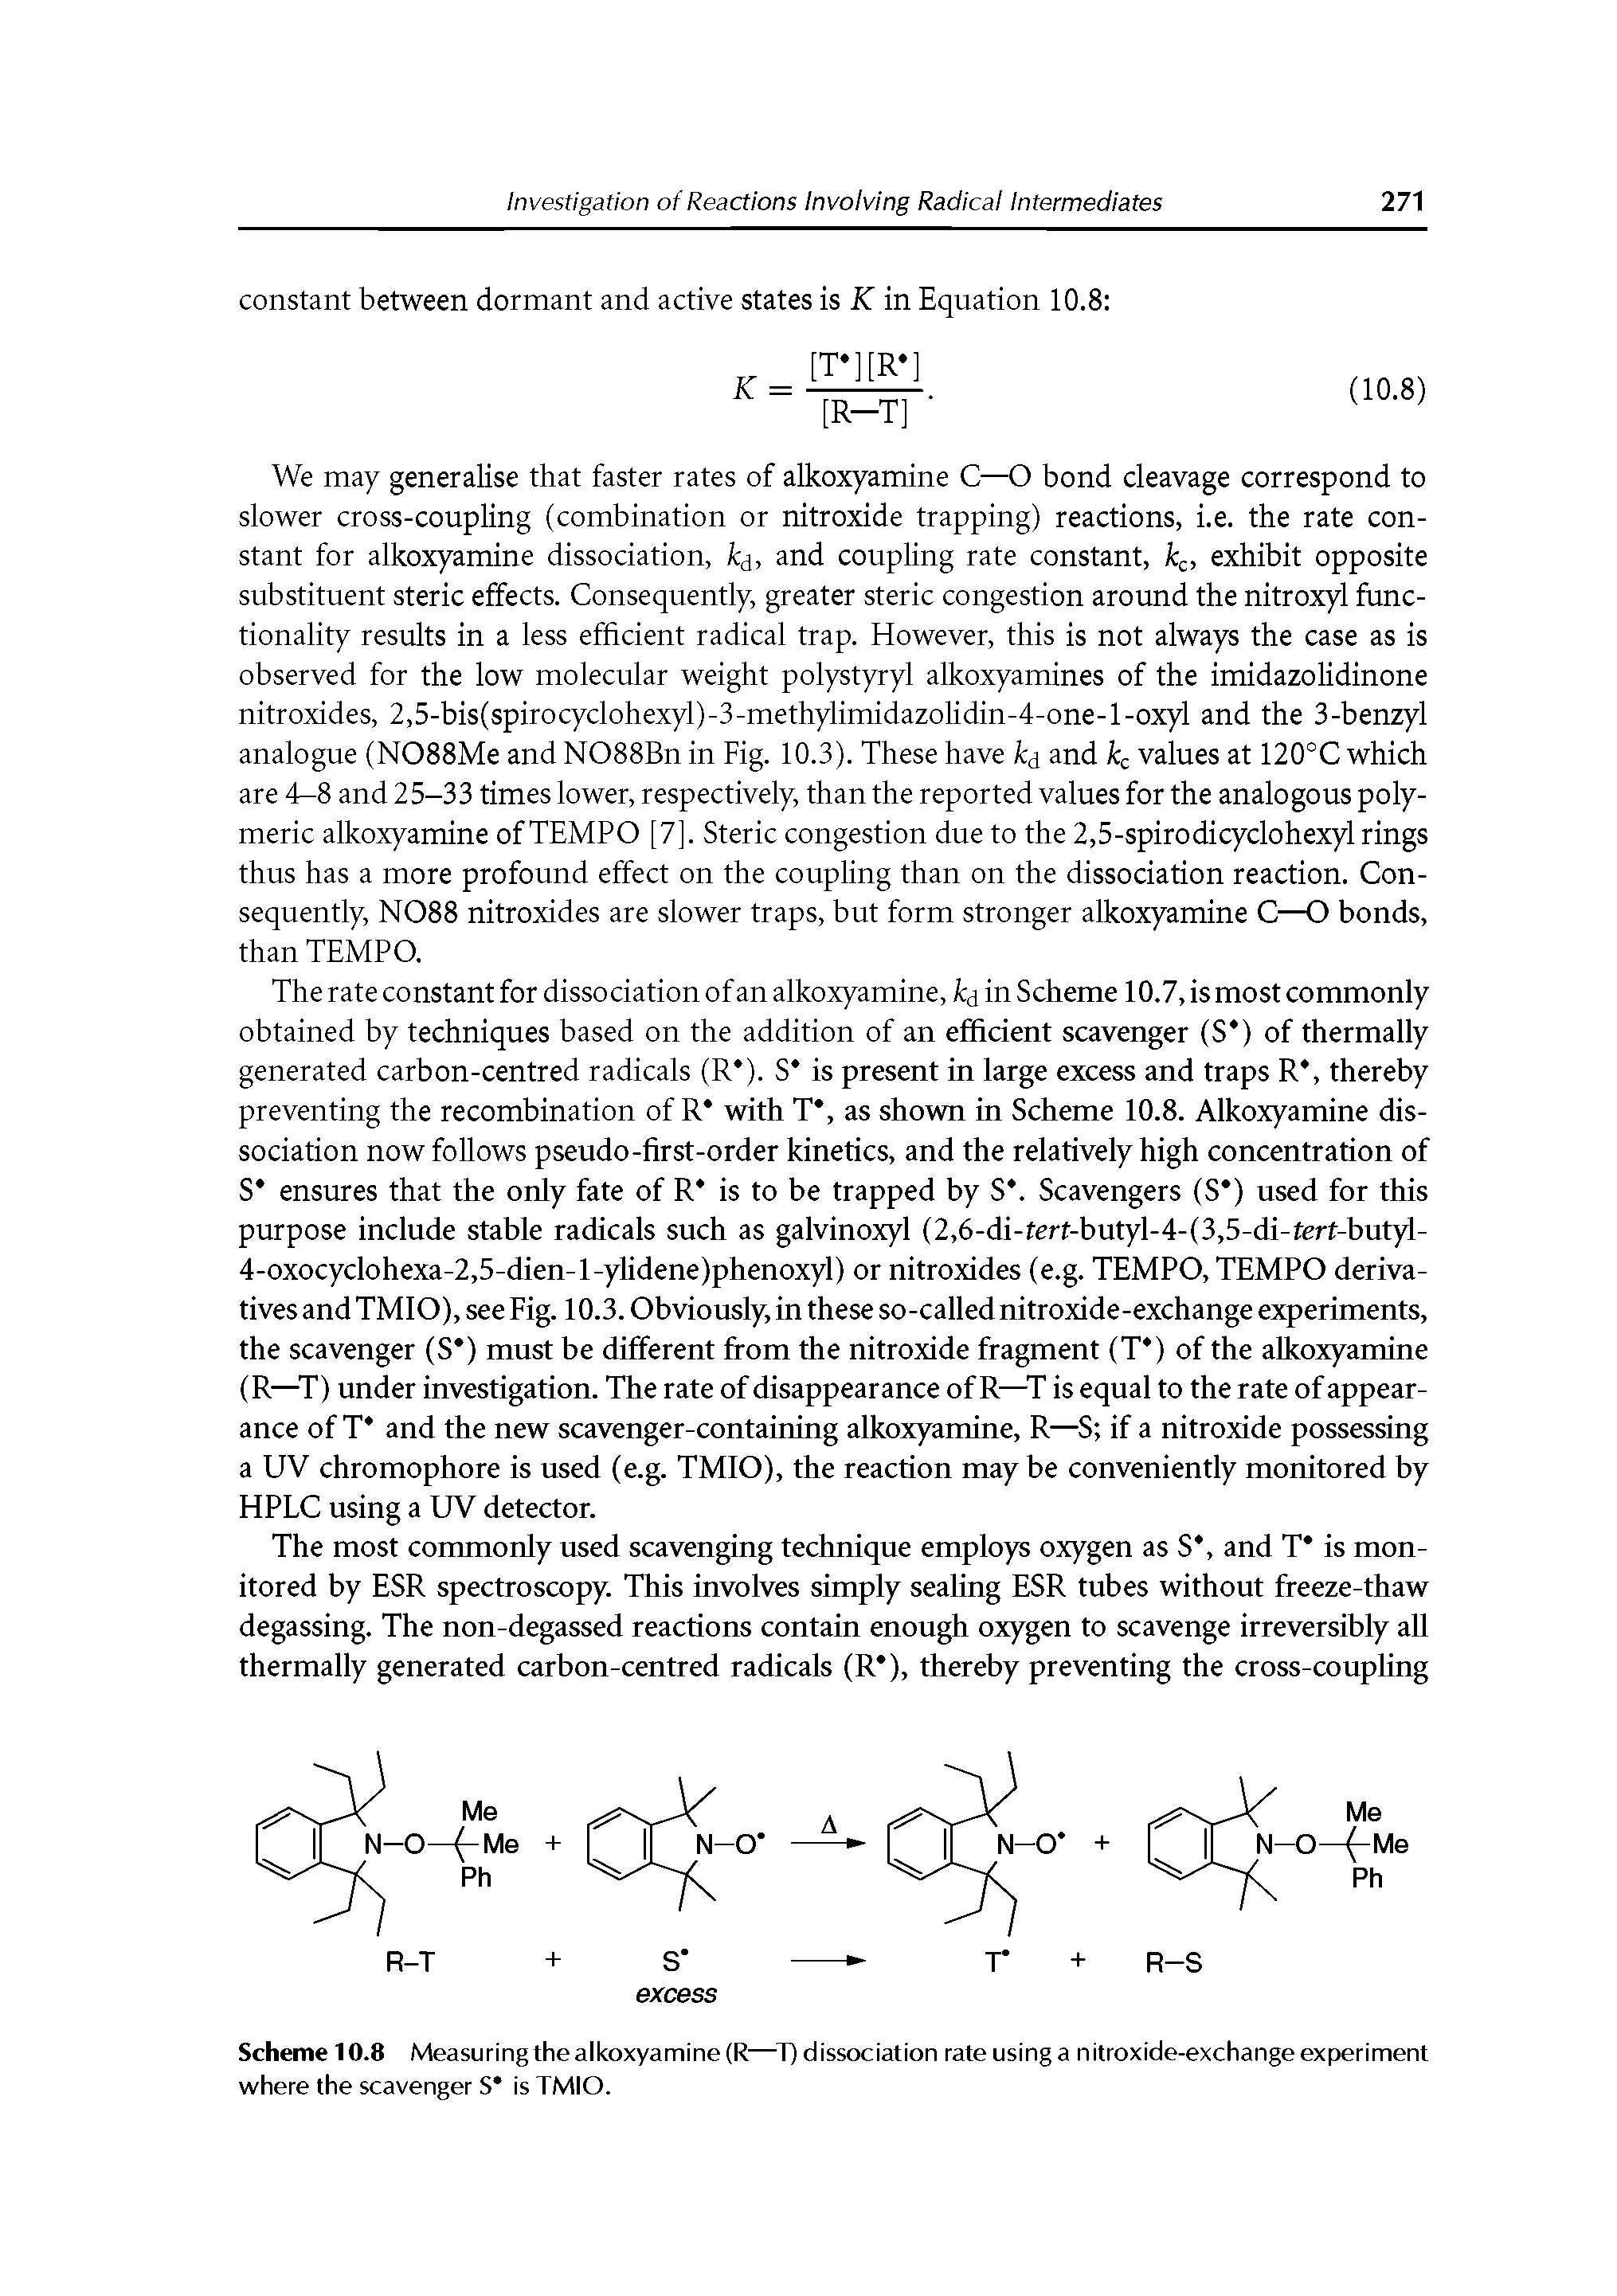 Scheme 10.8 Measuring the alkoxyamine (R—T) dissociation rate using a nitroxide-exchange experiment where the scavenger S is TMIO.